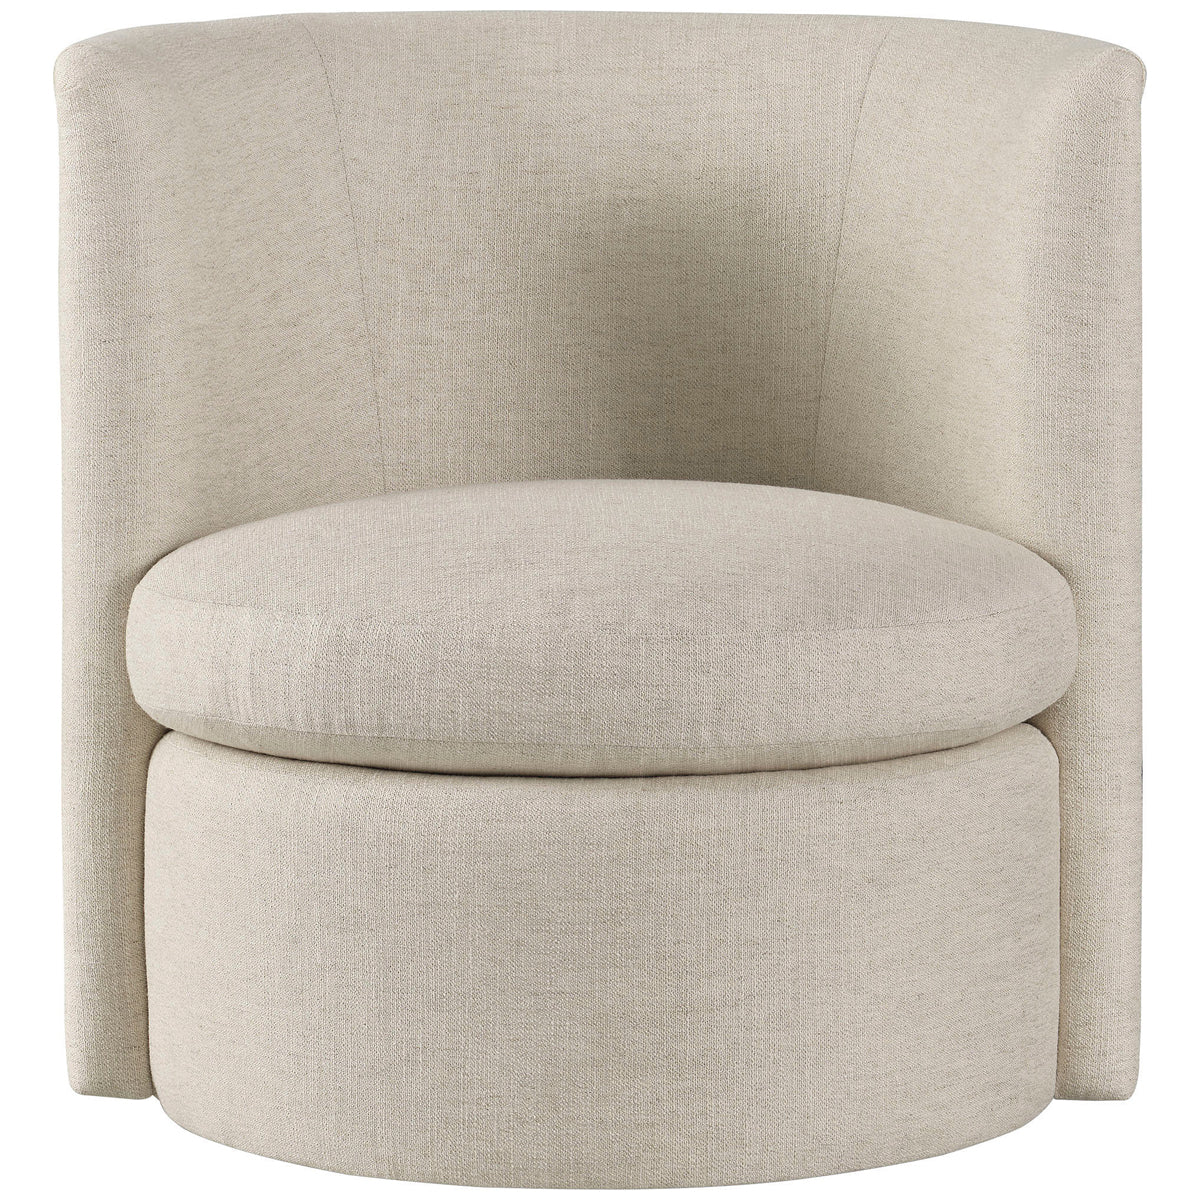 Baker Furniture Volute Swivel Chair BAA3501C